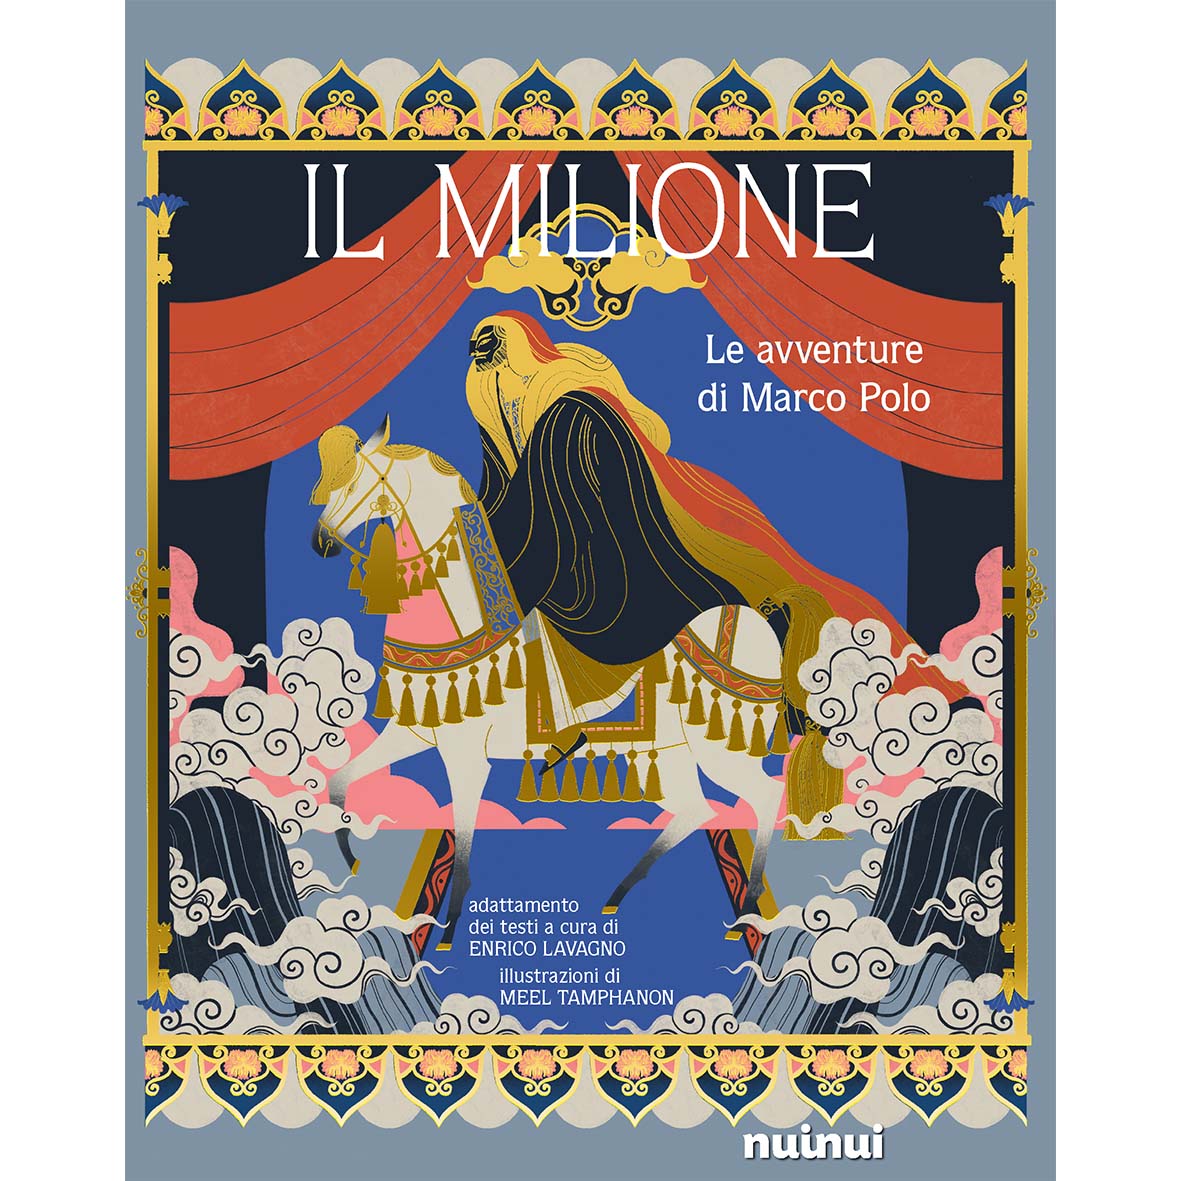 Il Milione - The adventures of Marco Polo